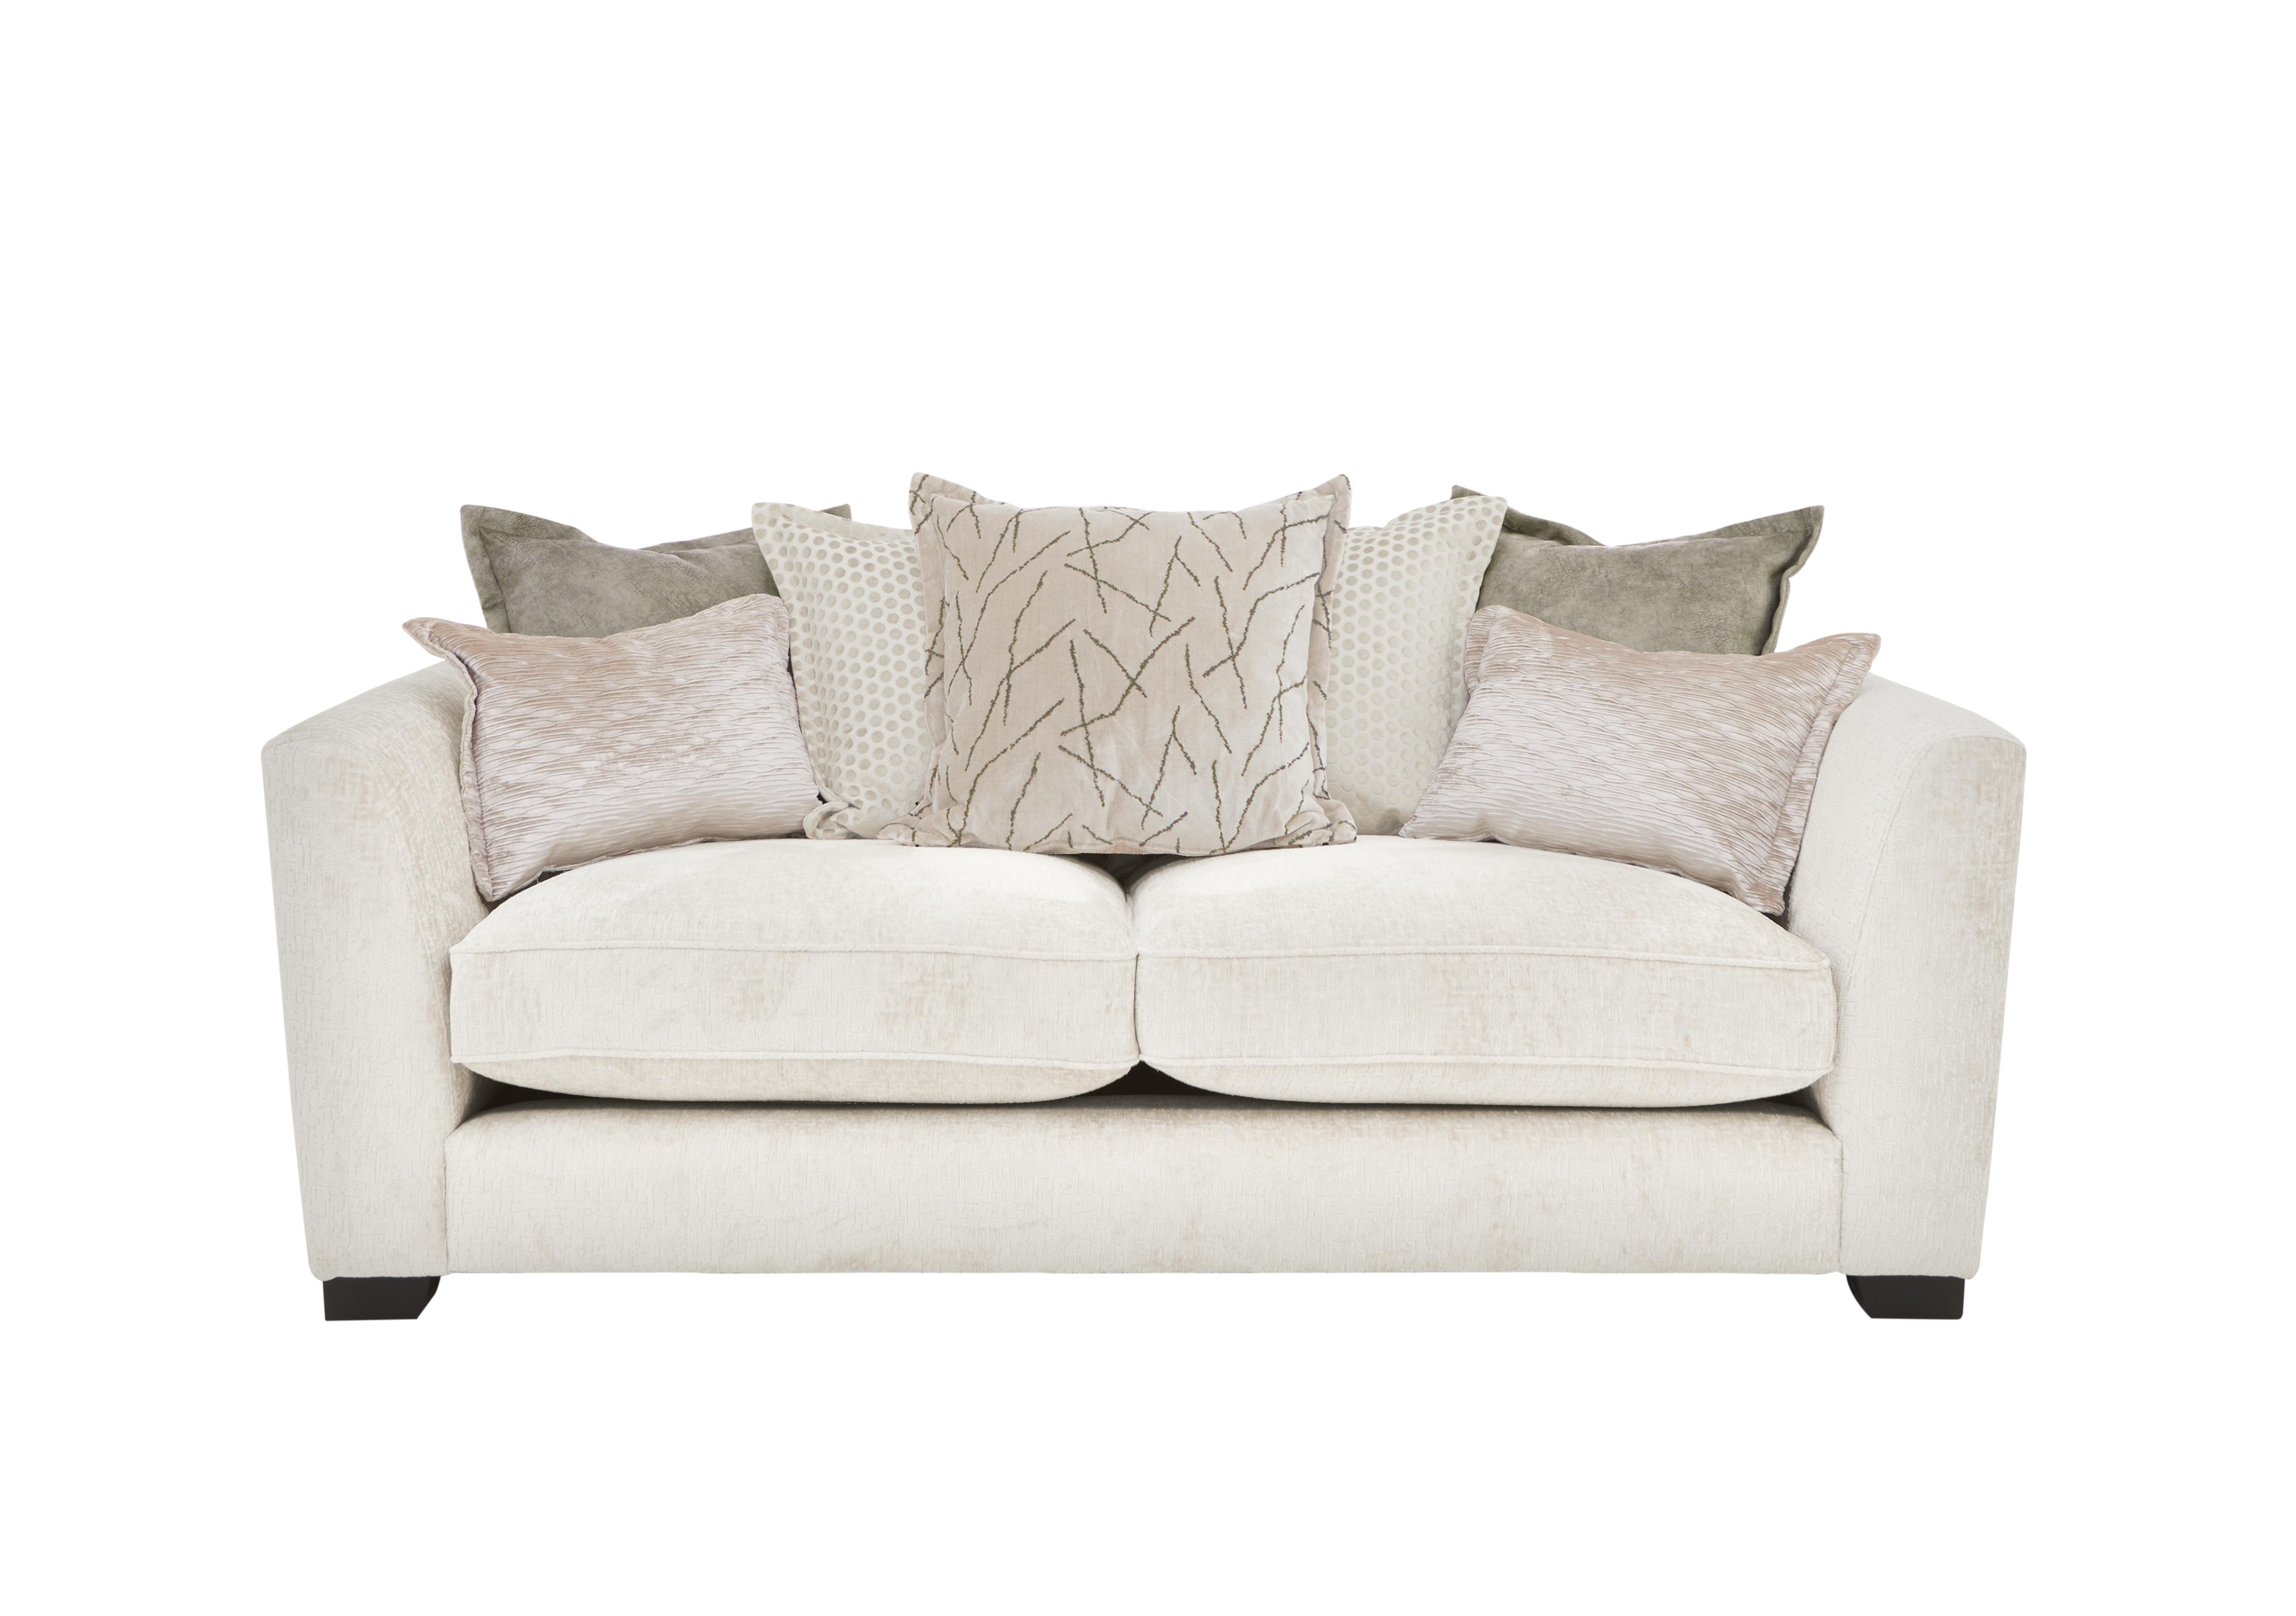 Boutique Lavish Fabric 3 Seater Scatter Back Sofa in Alexandra Ecru on Furniture Village